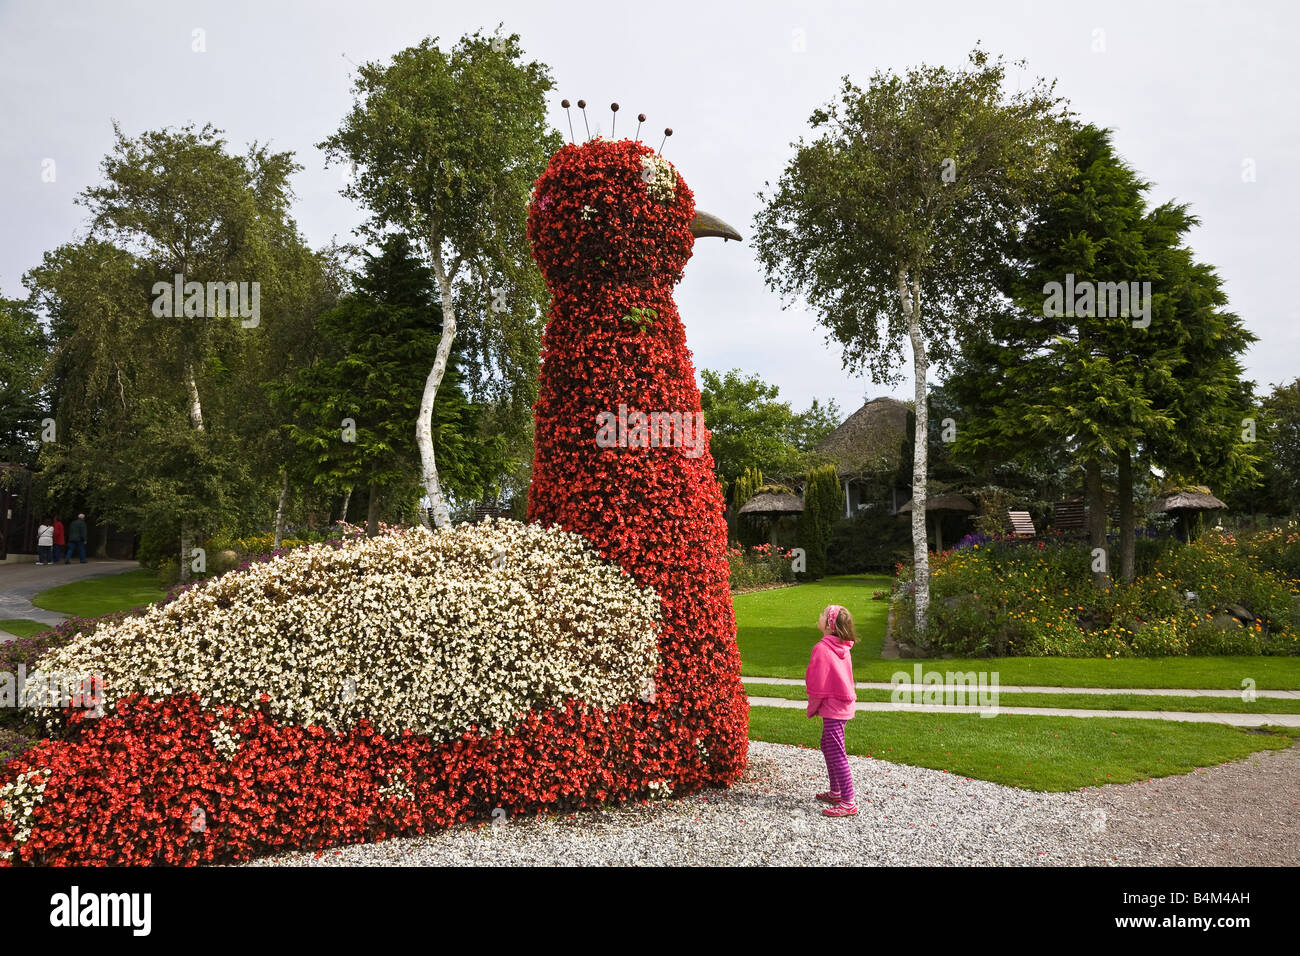 Small child dwarfed by huge floral display at Jesperhus flower park, Nykøbing, Denmark Stock Photo